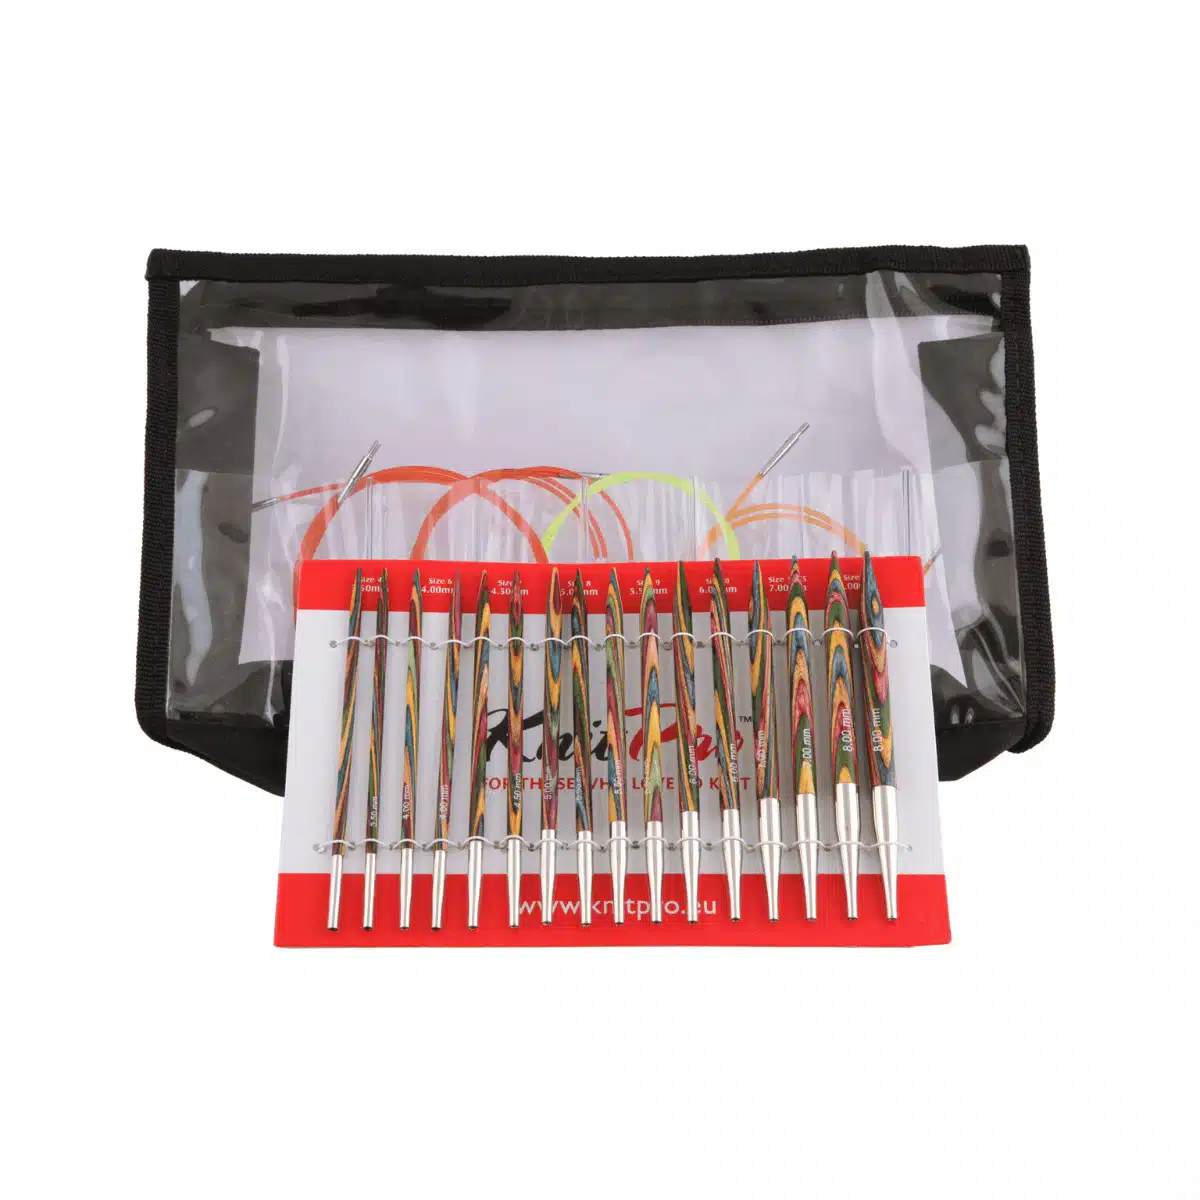 Knit Pro Symphonie Deluxe Interchangeable Needle set